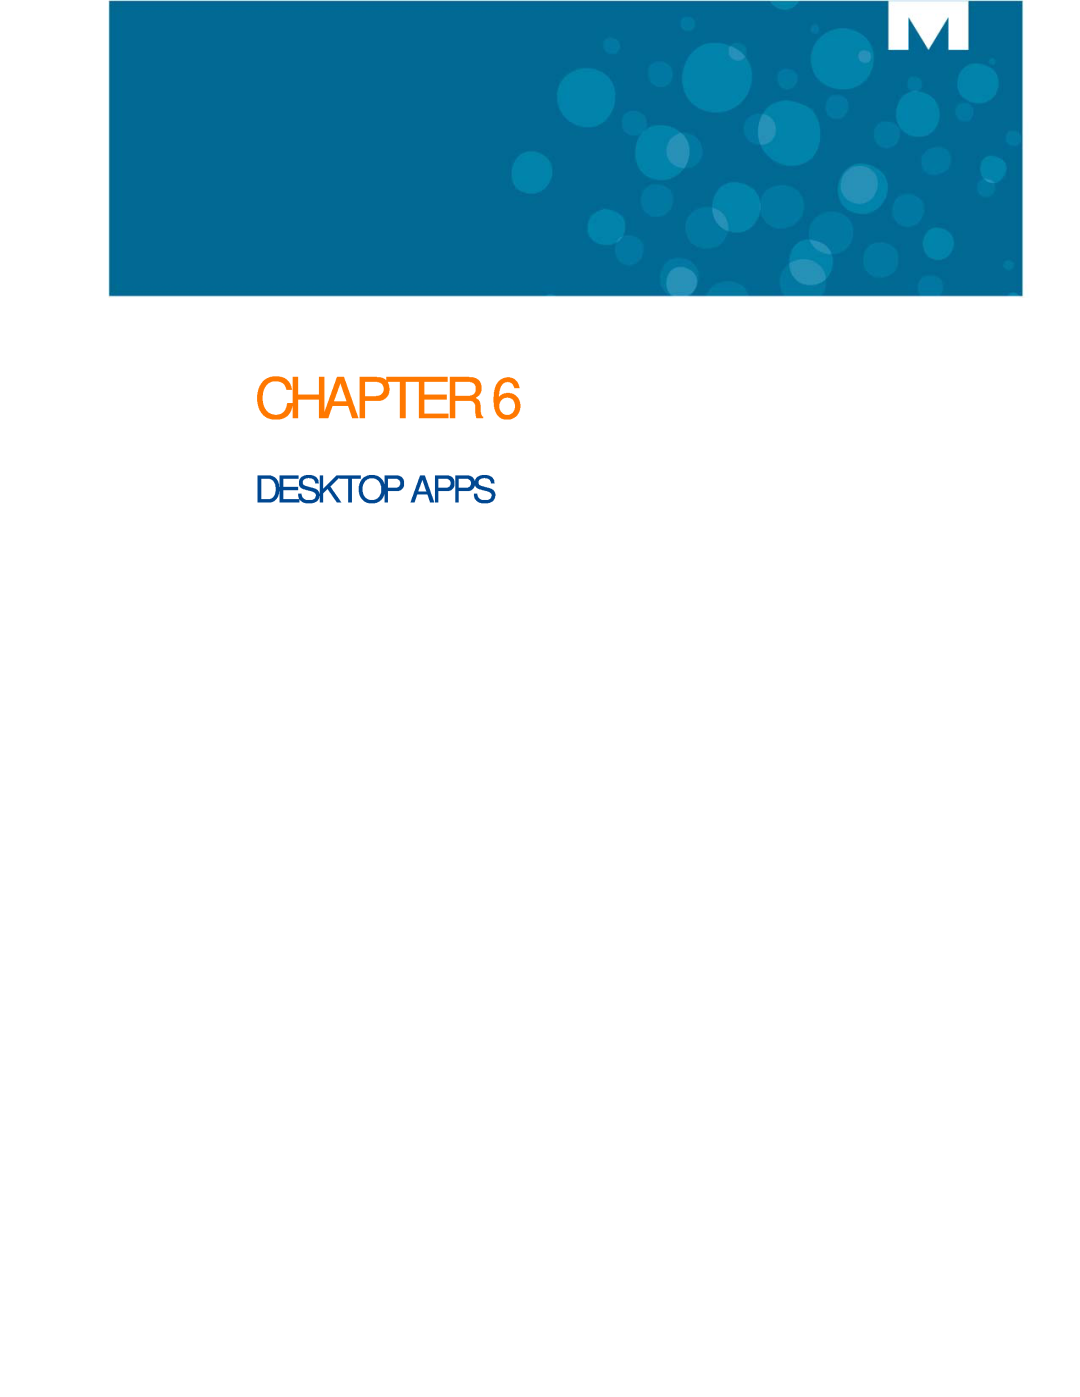 Mitel UC360 manual Desktop Apps, Chapter 